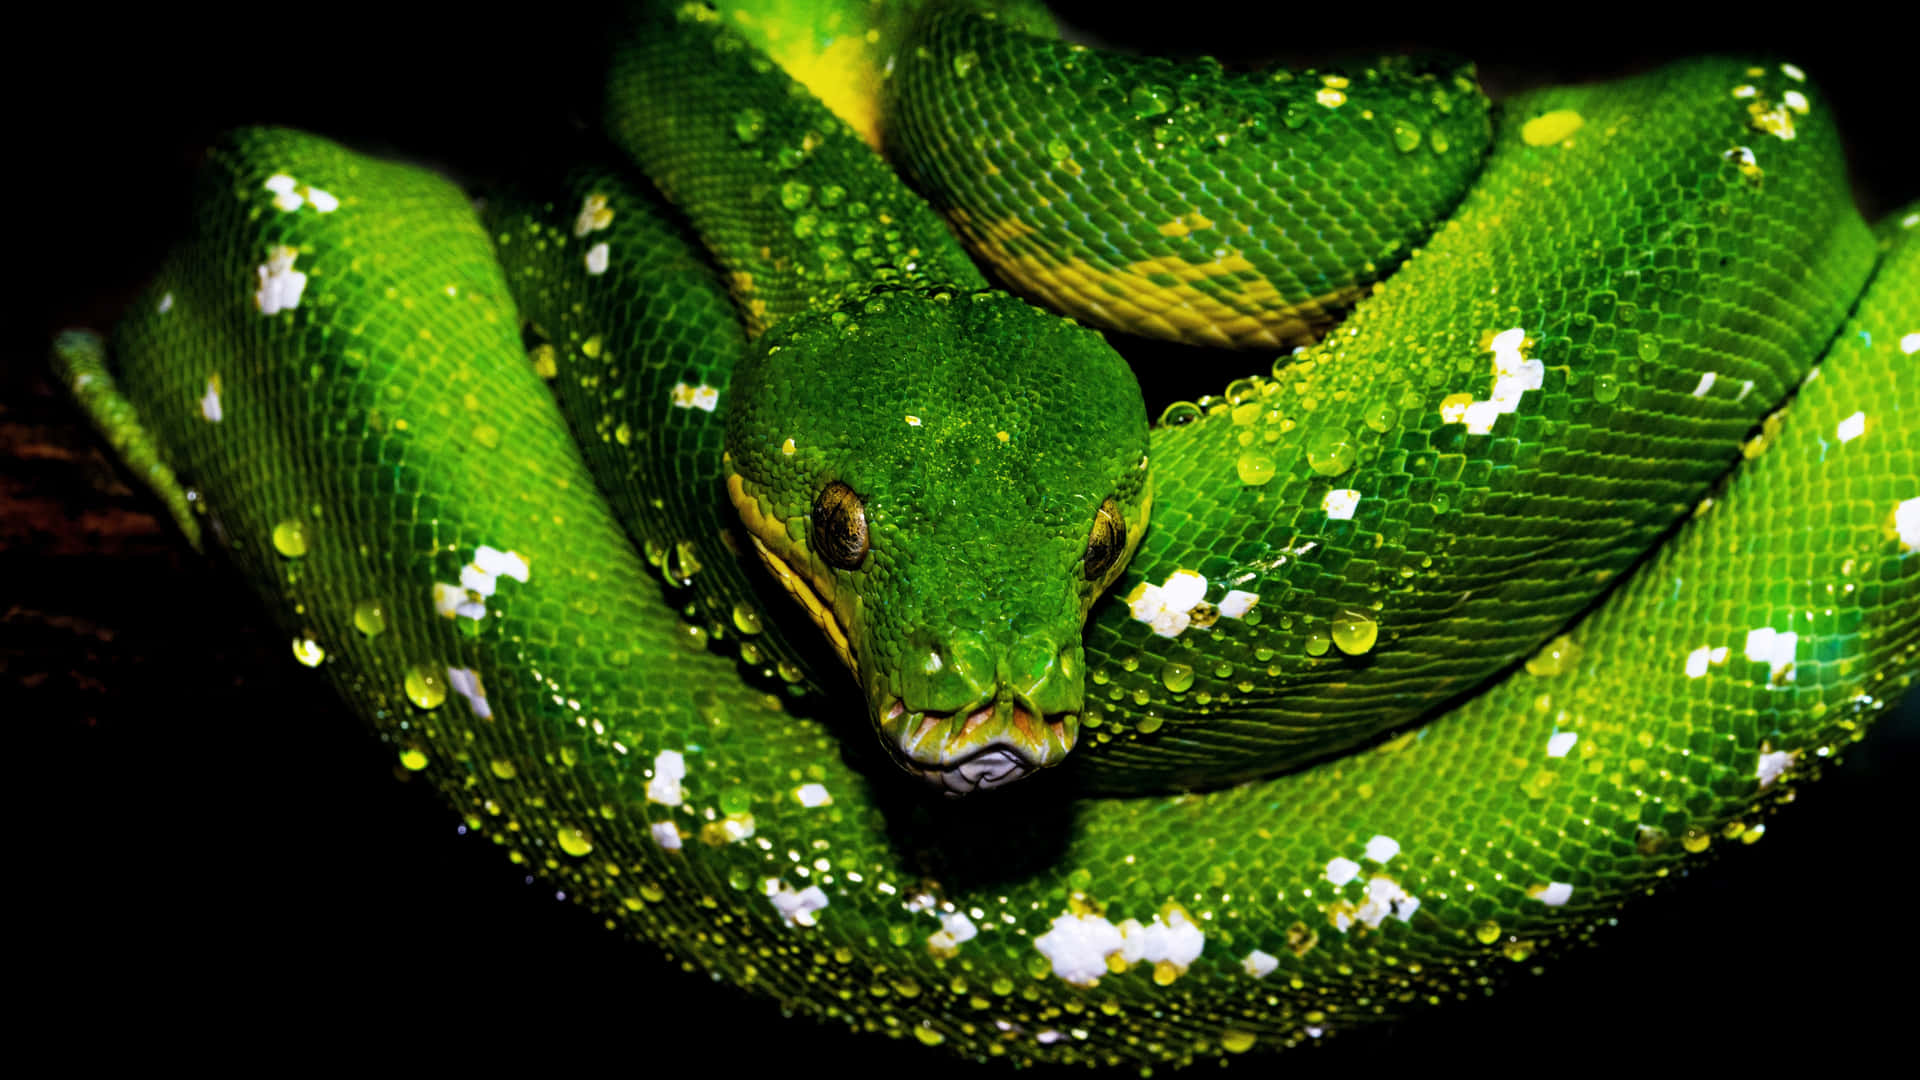 An Up Close Look at a Striking Snake